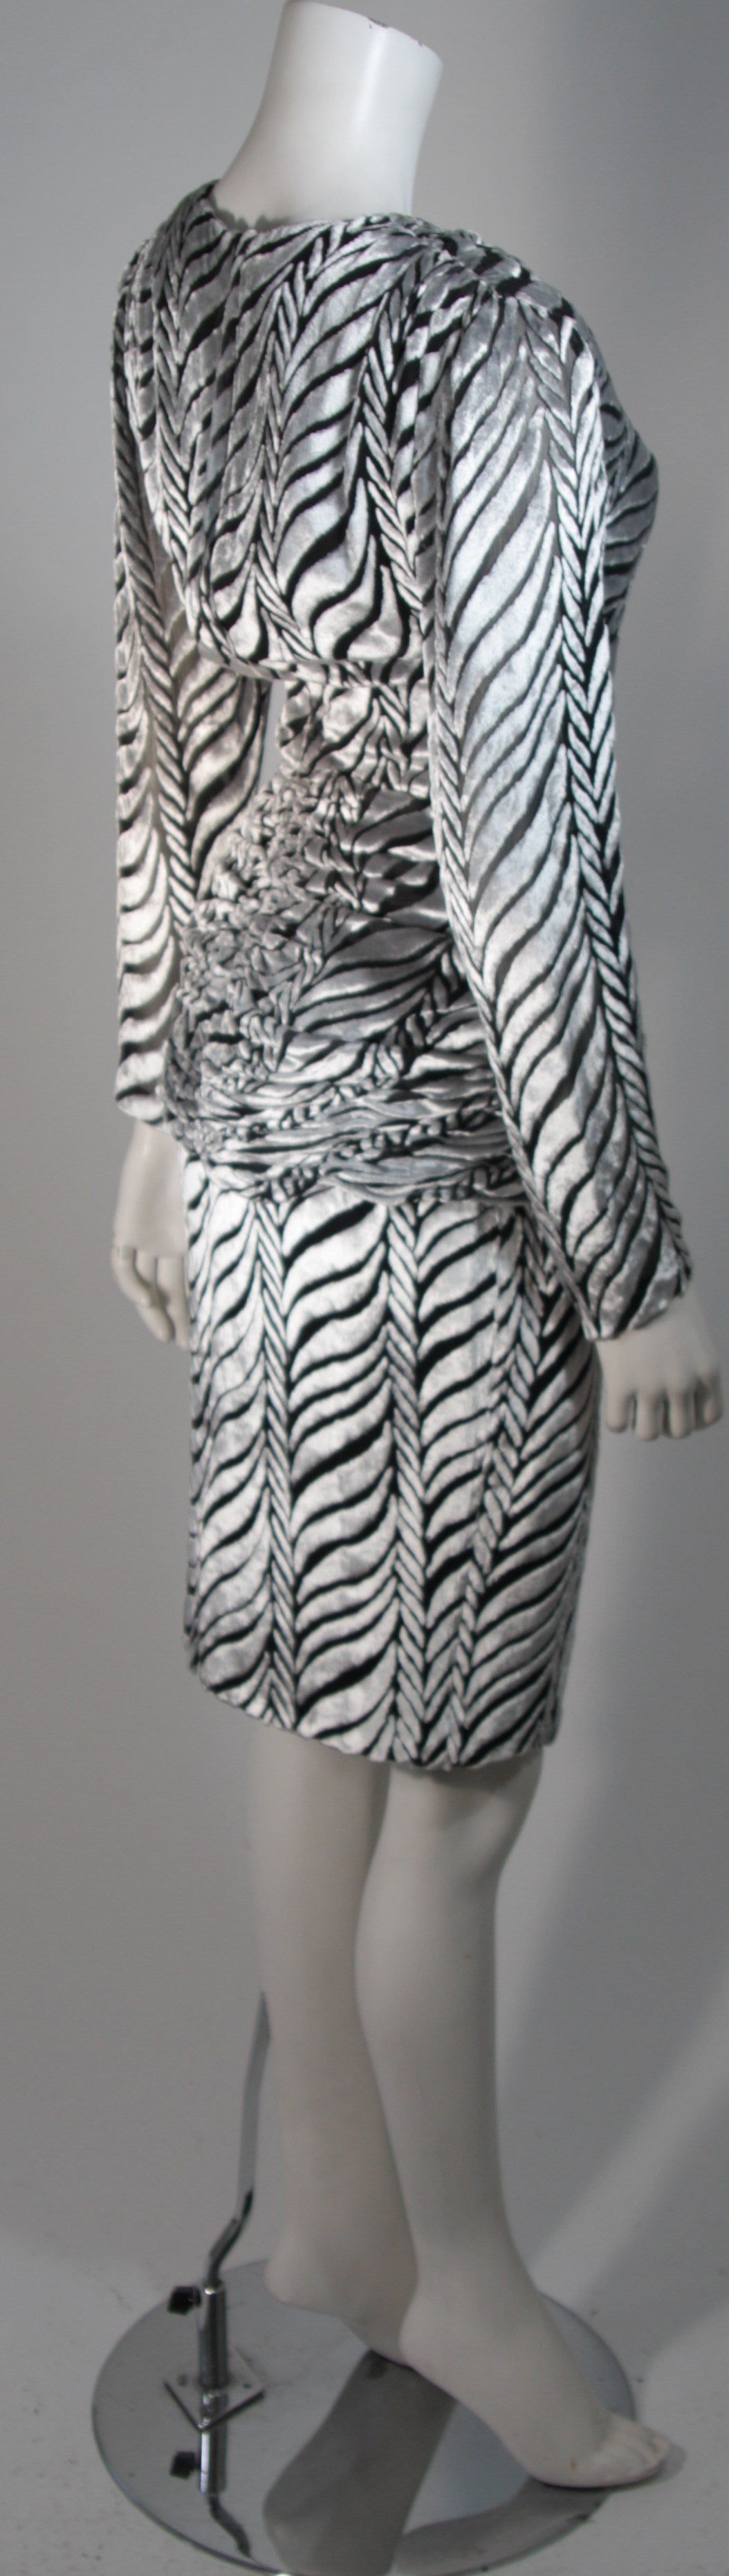 Vicky Tiel Black and Silver Burnout Striped Velvet Cocktail Dress Size Small 1